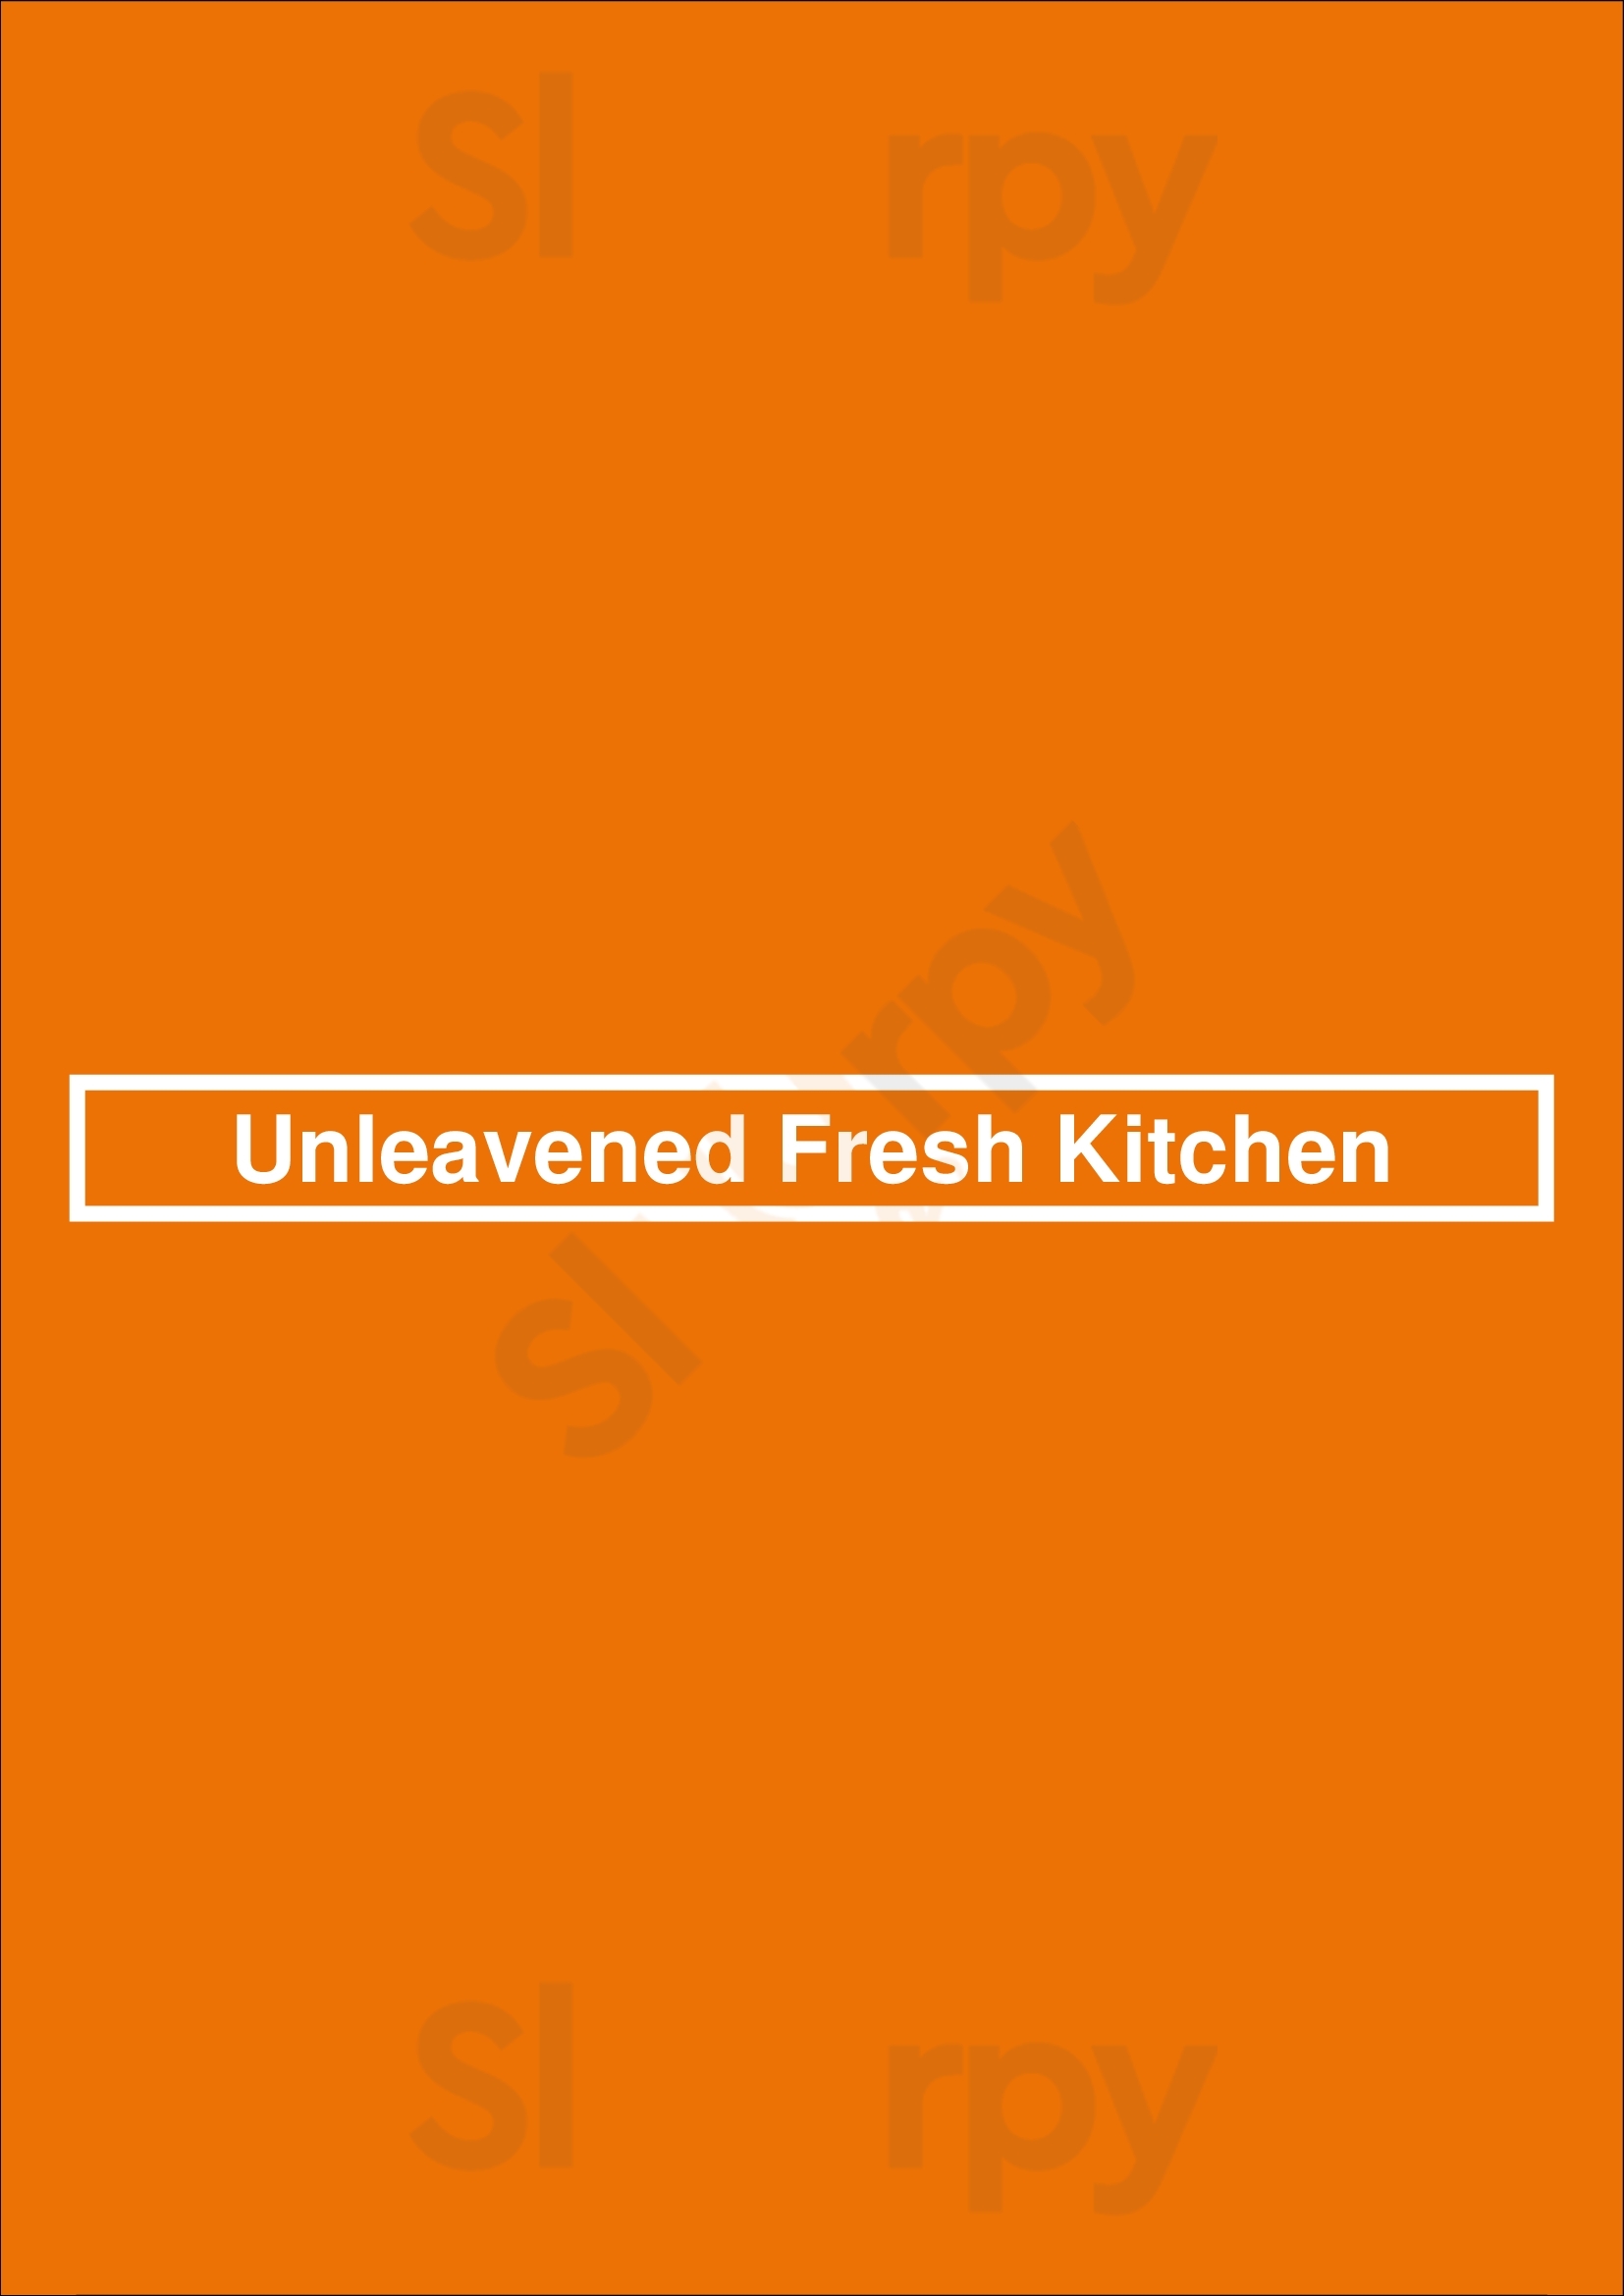 Unleavened Fresh Kitchen Dallas Menu - 1